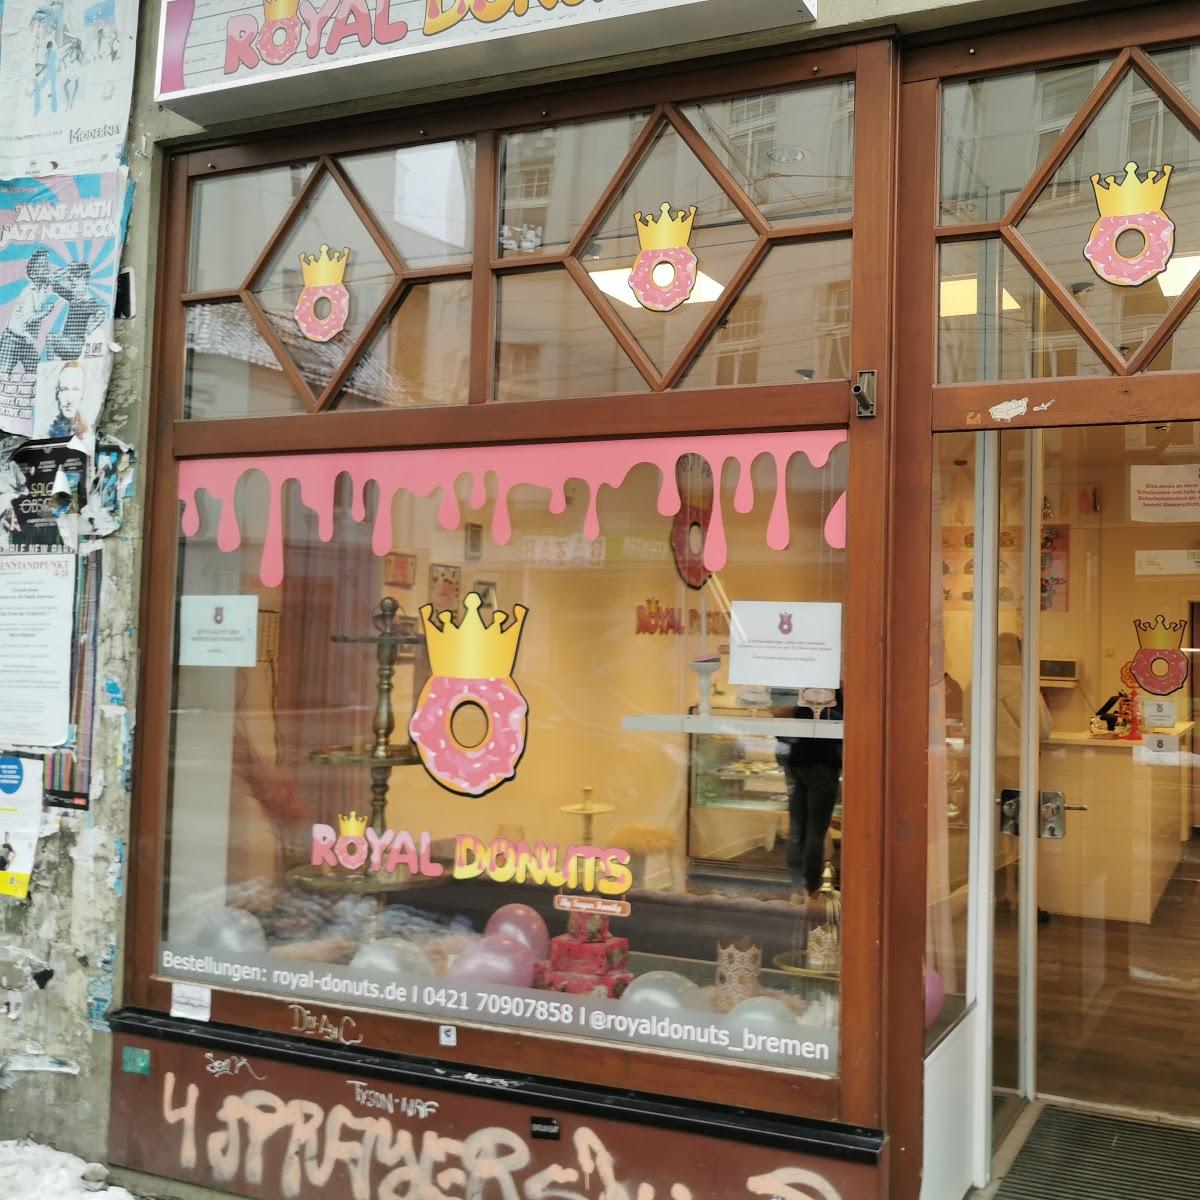 Restaurant "Royal Donuts" in Bremen